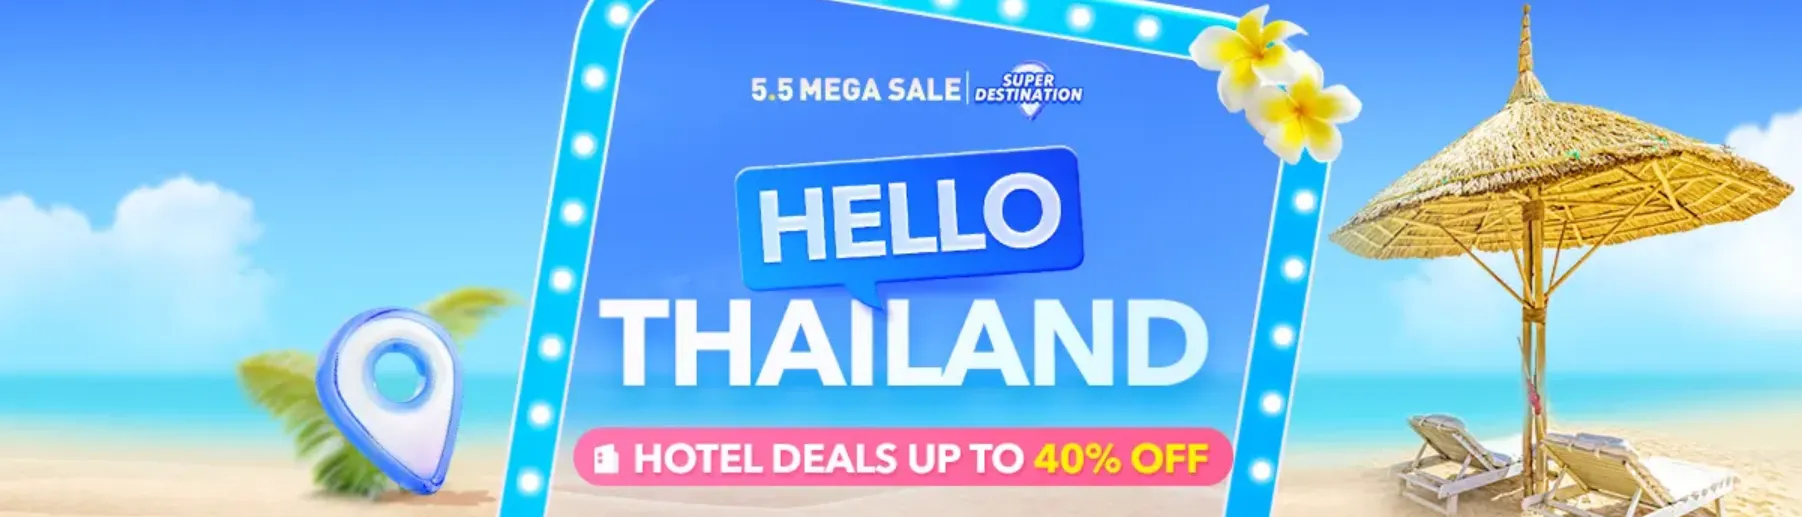 Trip.com Promo Code Malaysia: 5.5 Mega Sale: Hello Thailand Hotels Up to 40% Off